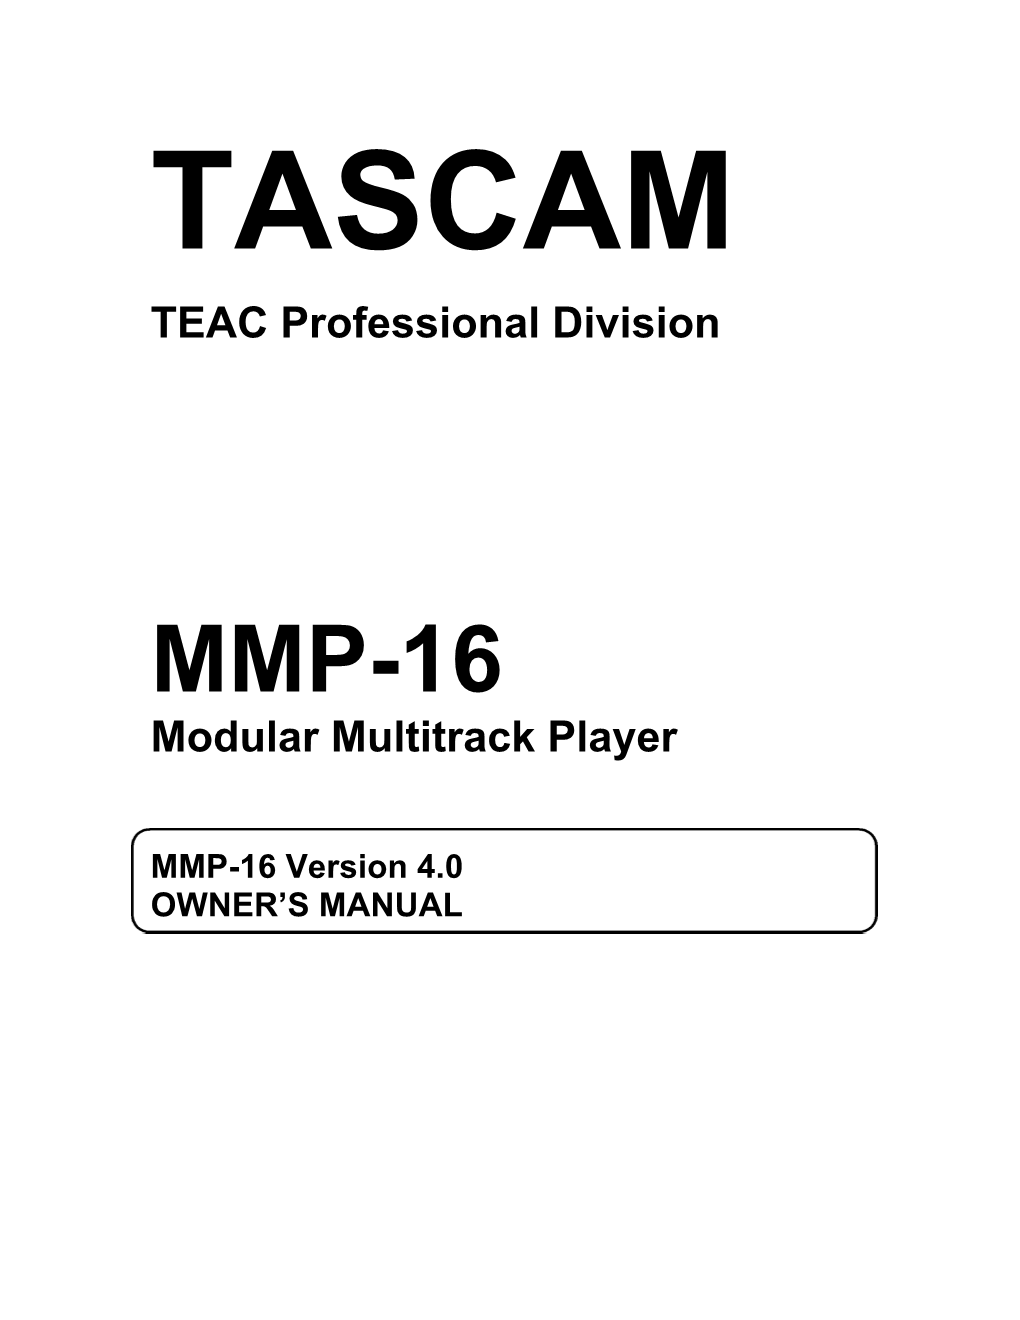 MMP-16 Modular Multitrack Player